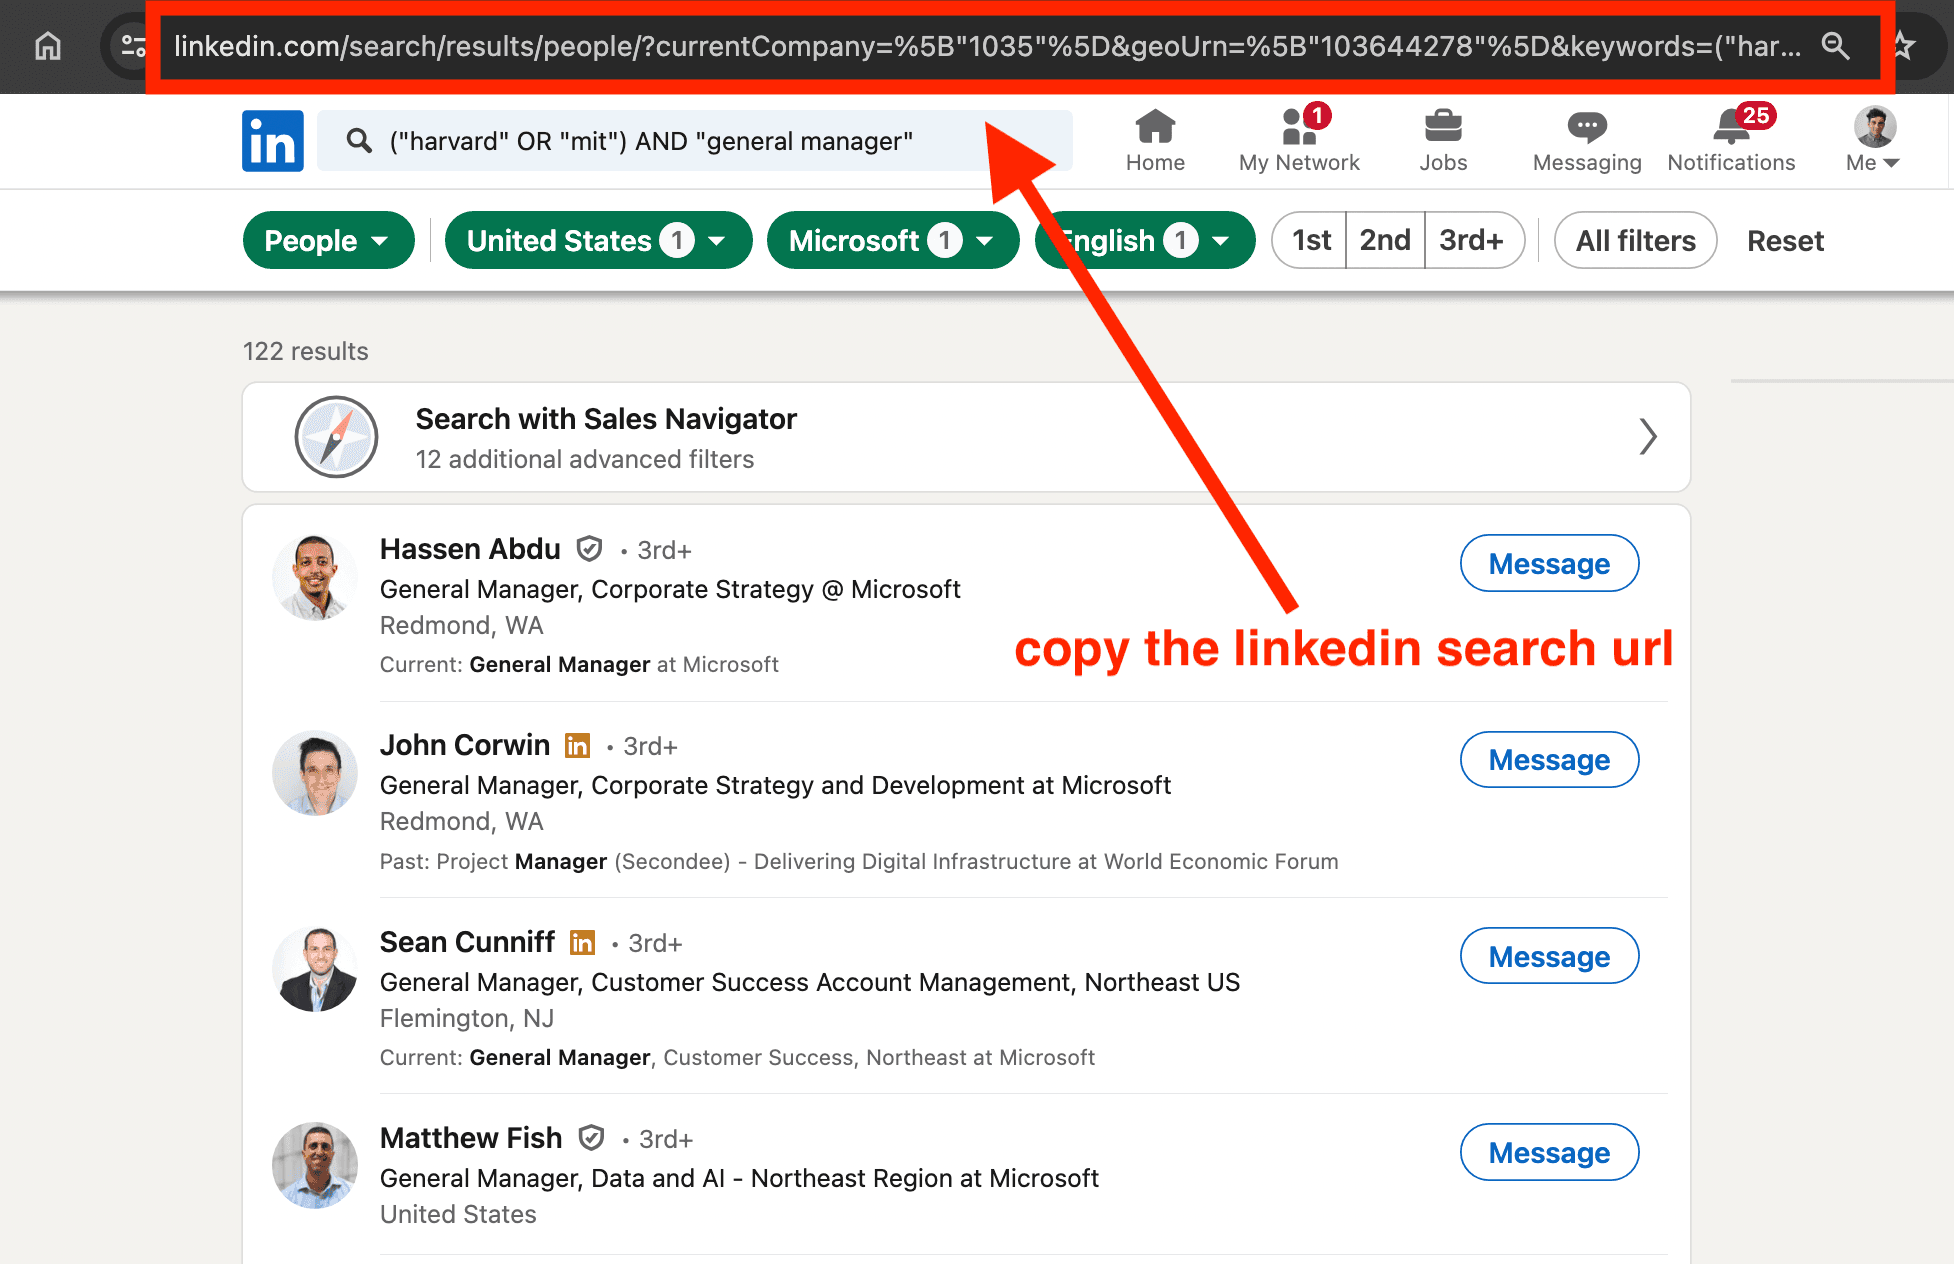 save a linkedin search copy the linkedin url - image14.png